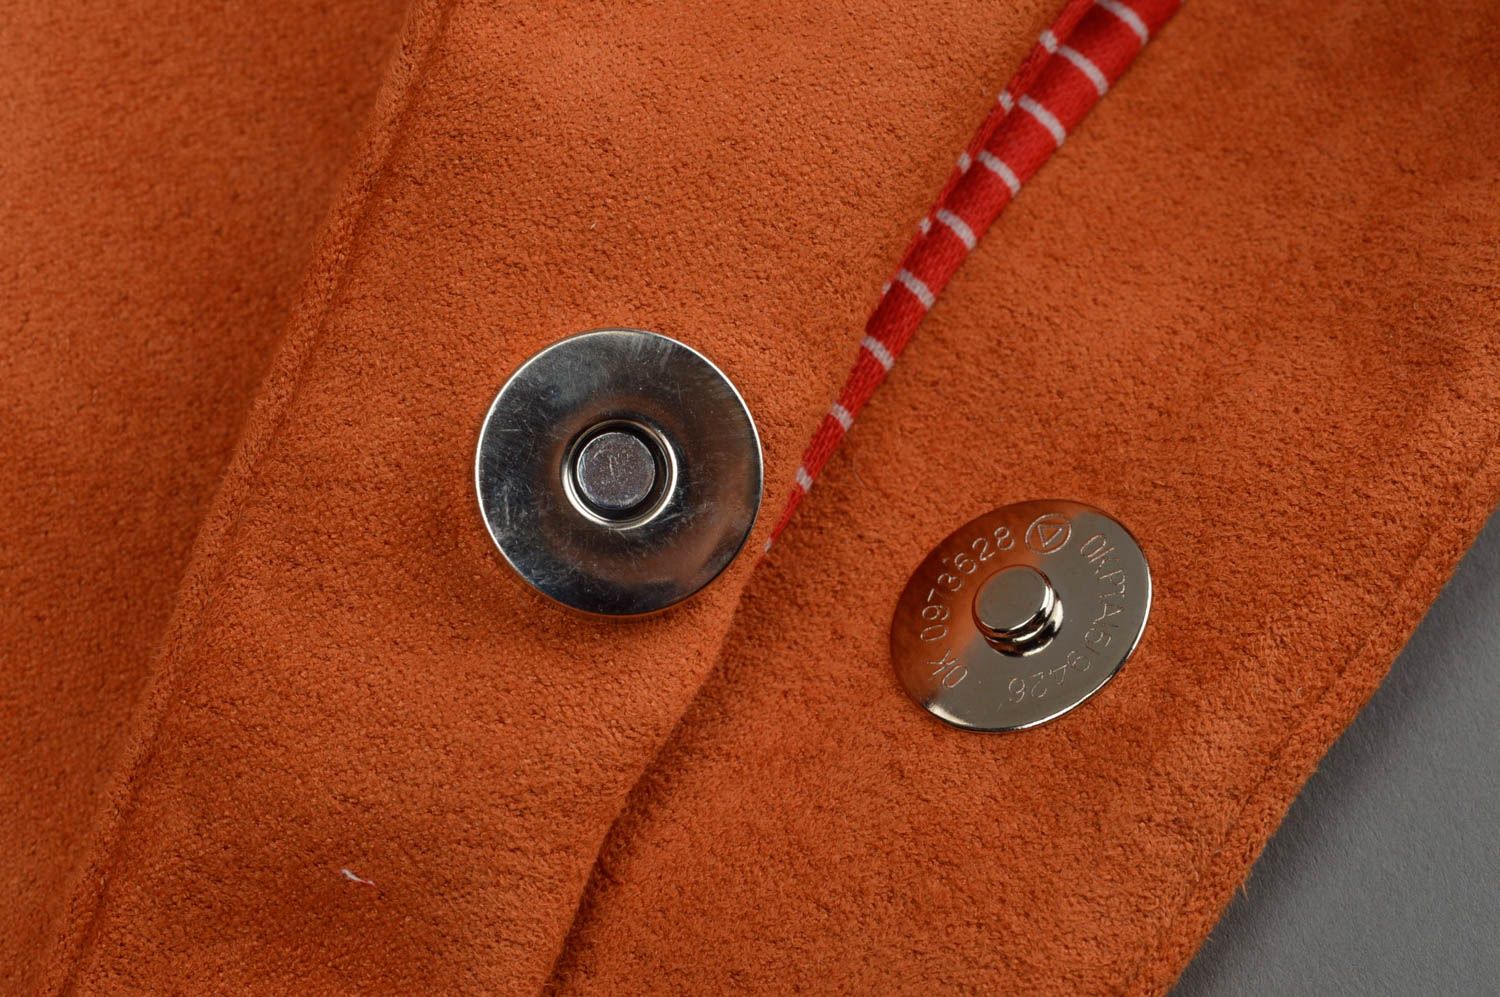 Handmade orange cloth purse designer handbag gift ideas for her women accessory photo 5